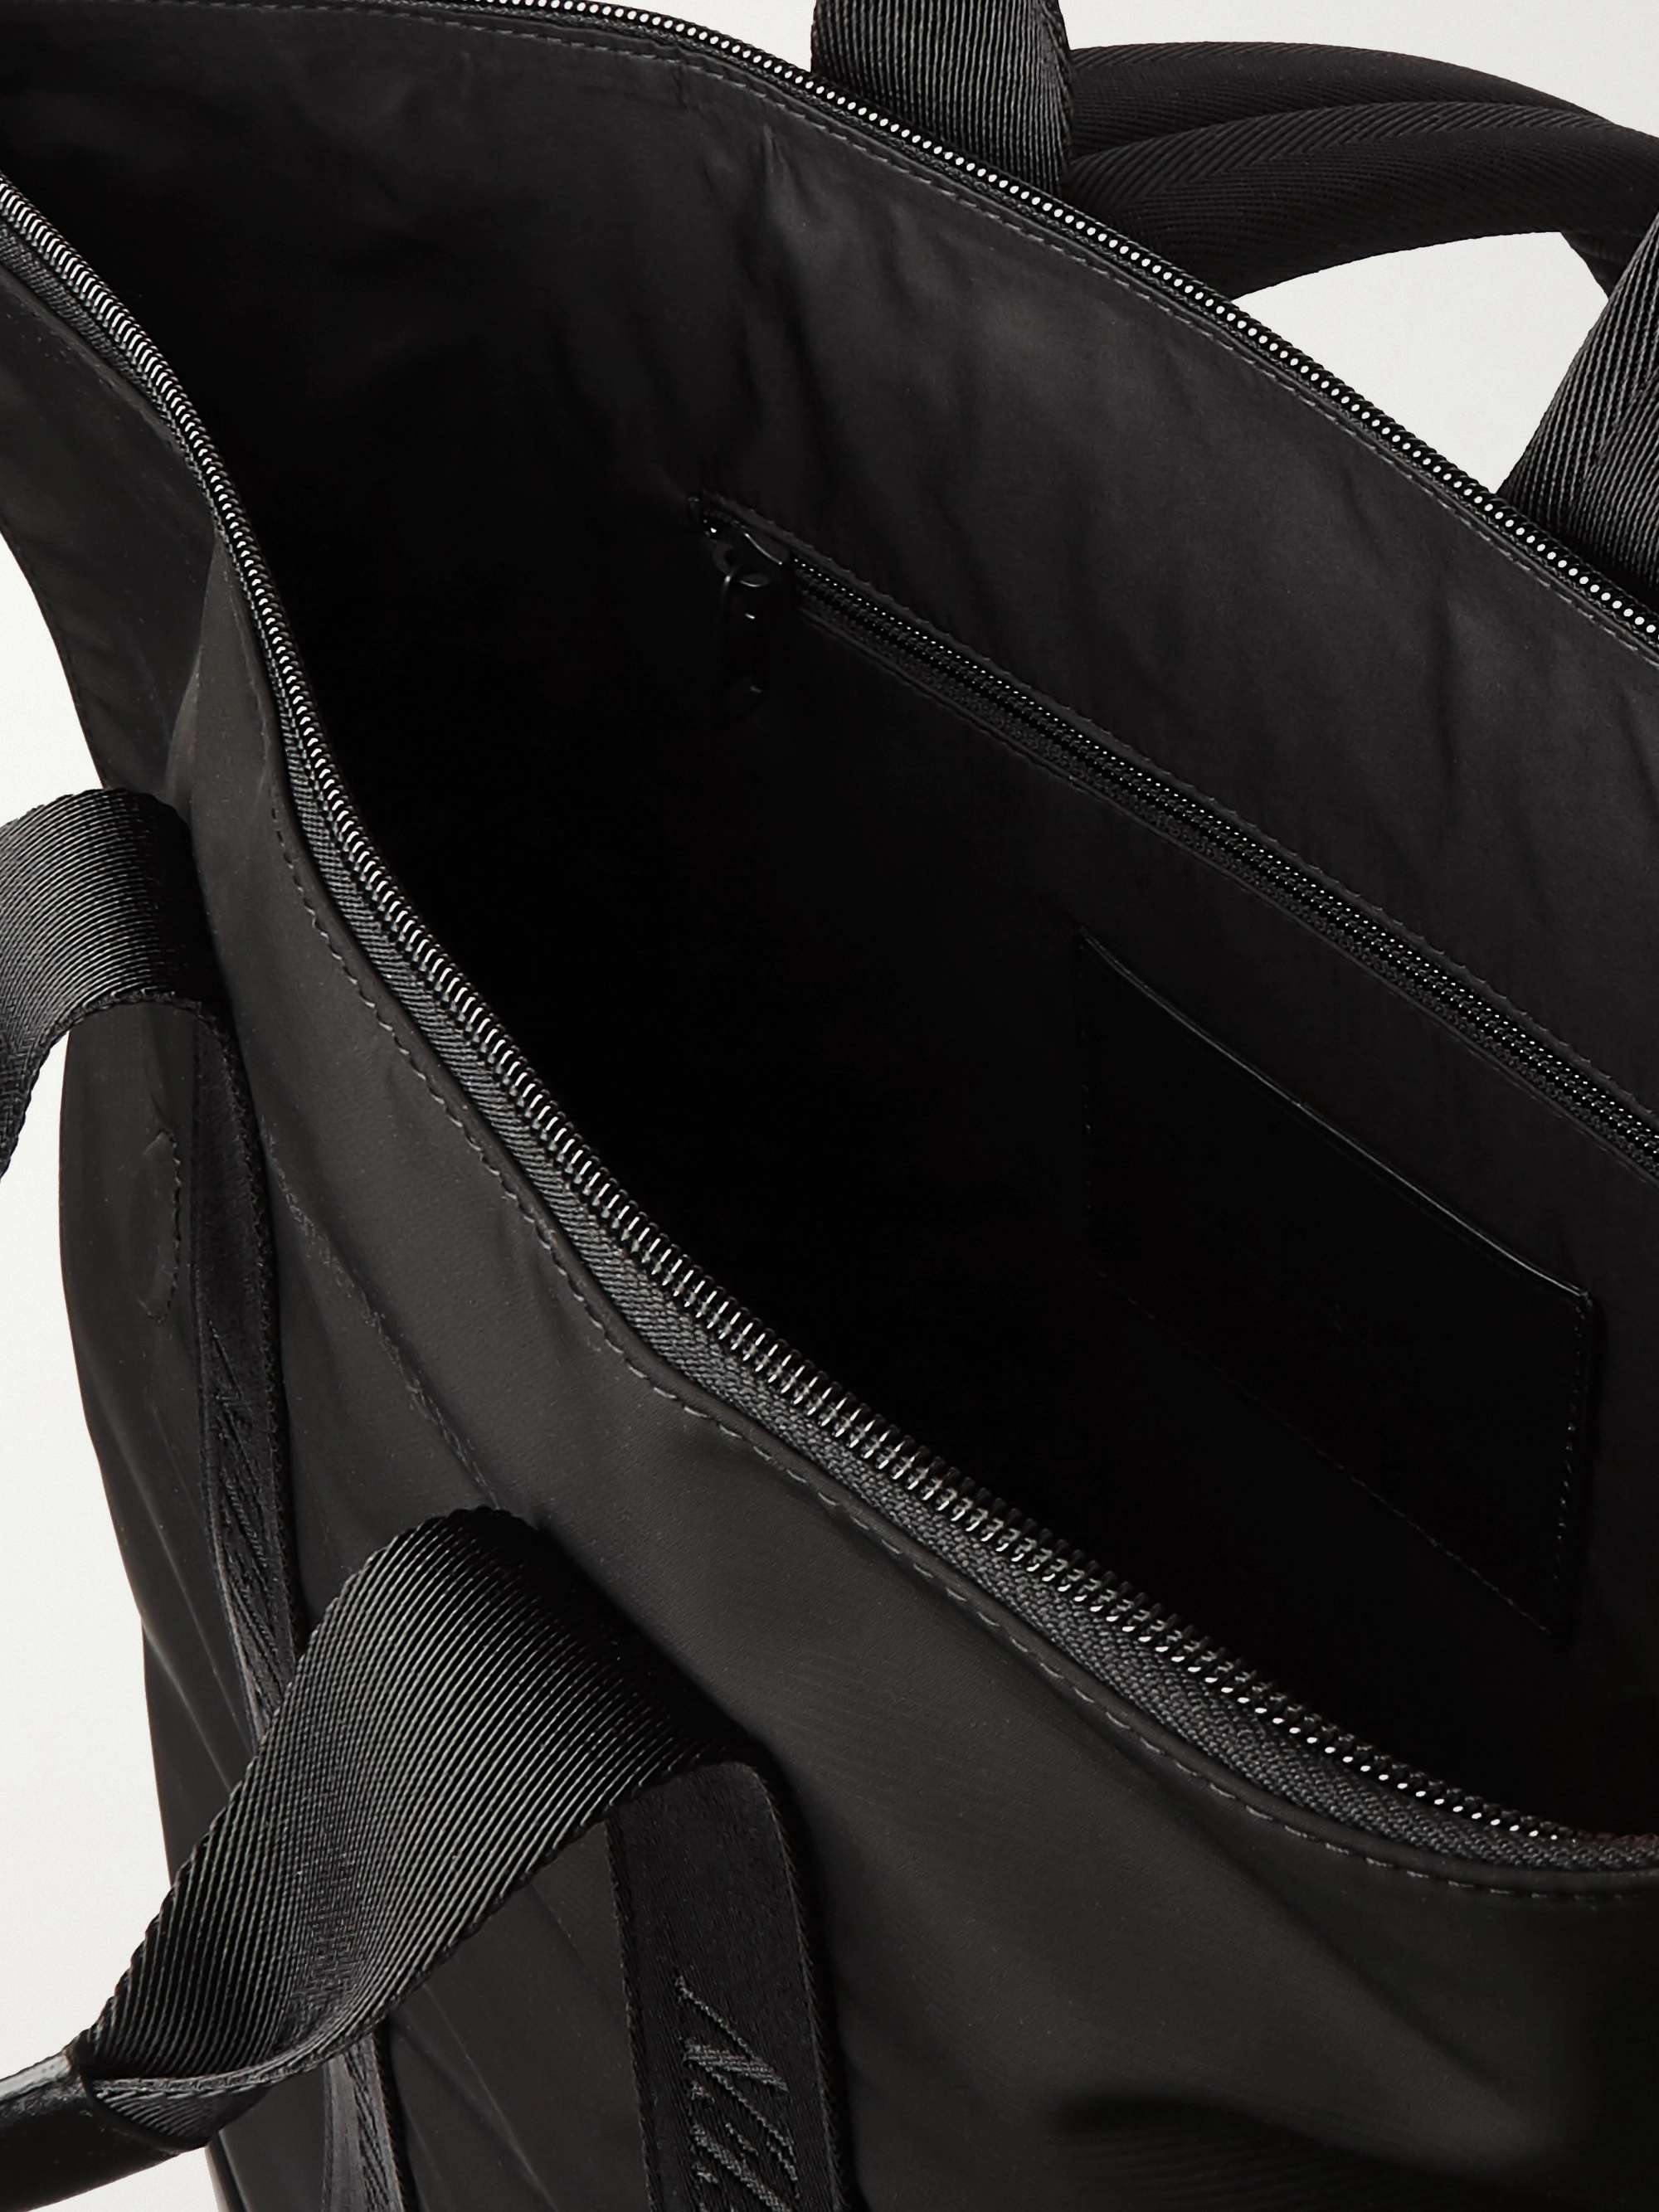 ALEXANDER MCQUEEN De Manta Leather-Trimmed Nylon Convertible Tote Bag